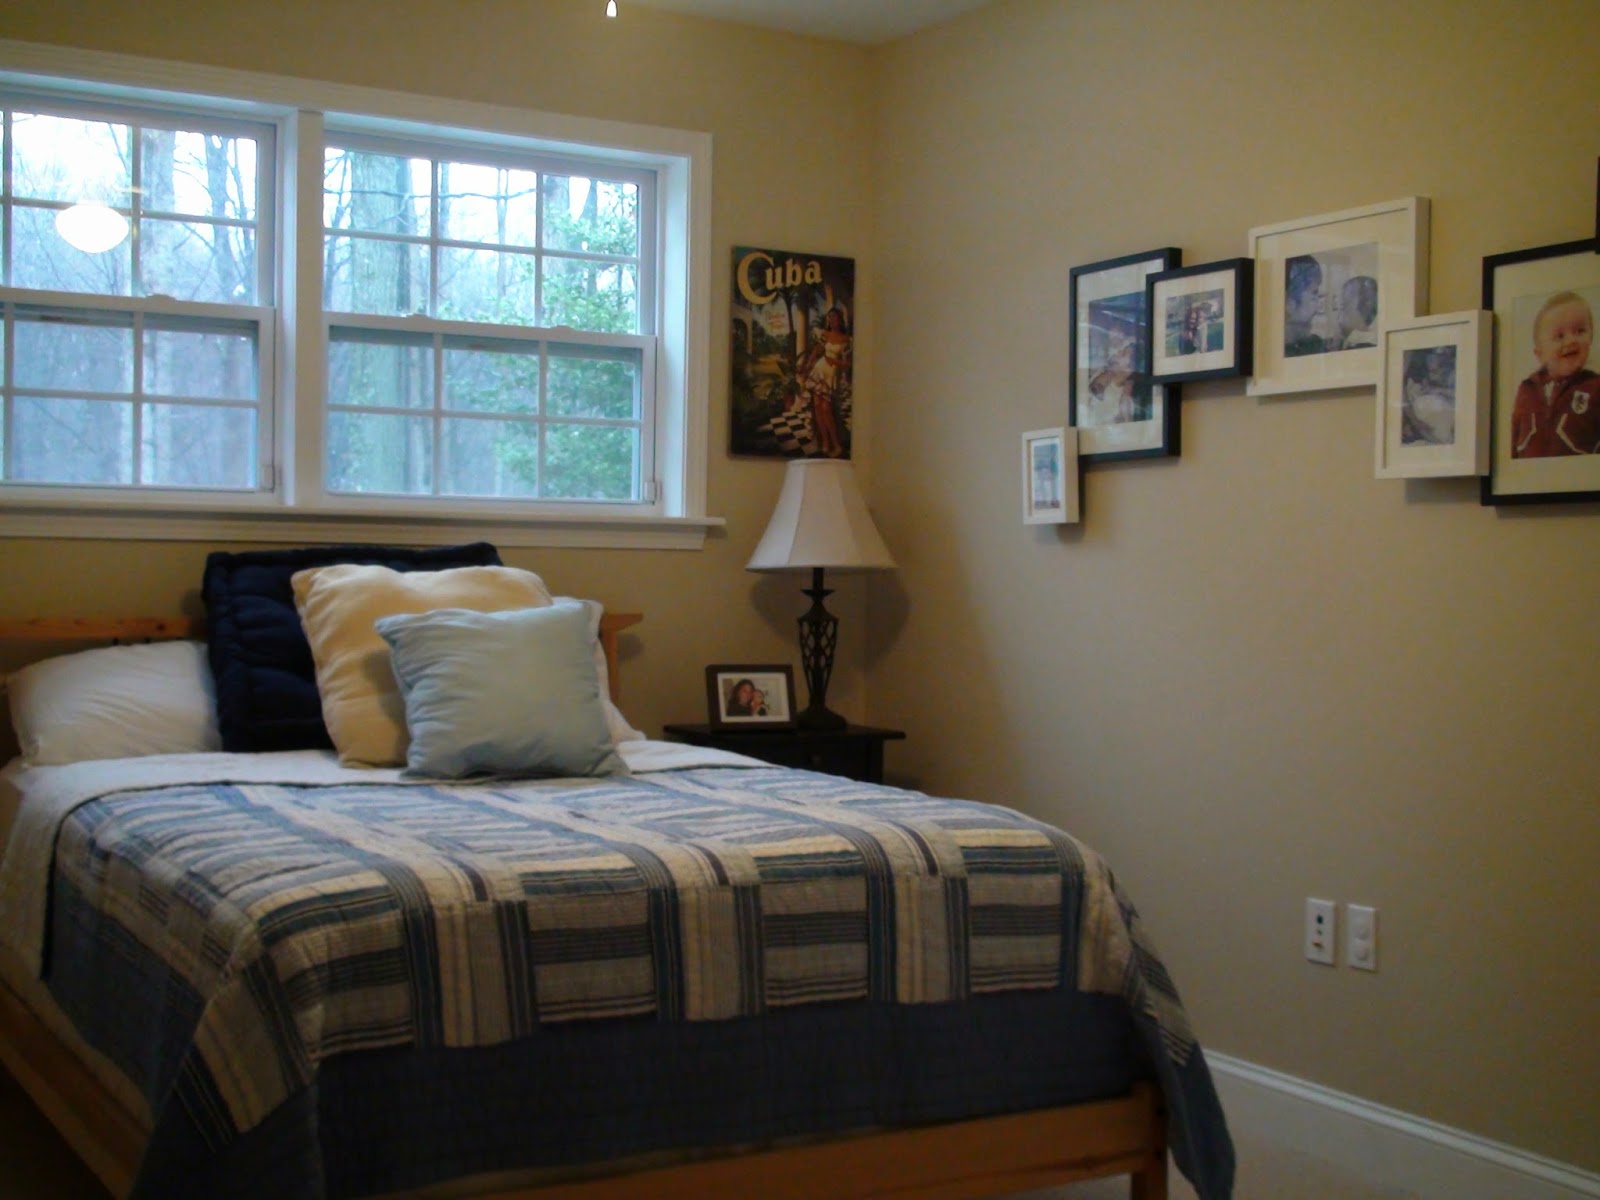  Simple  Guest  Rooms  Freshnist Design